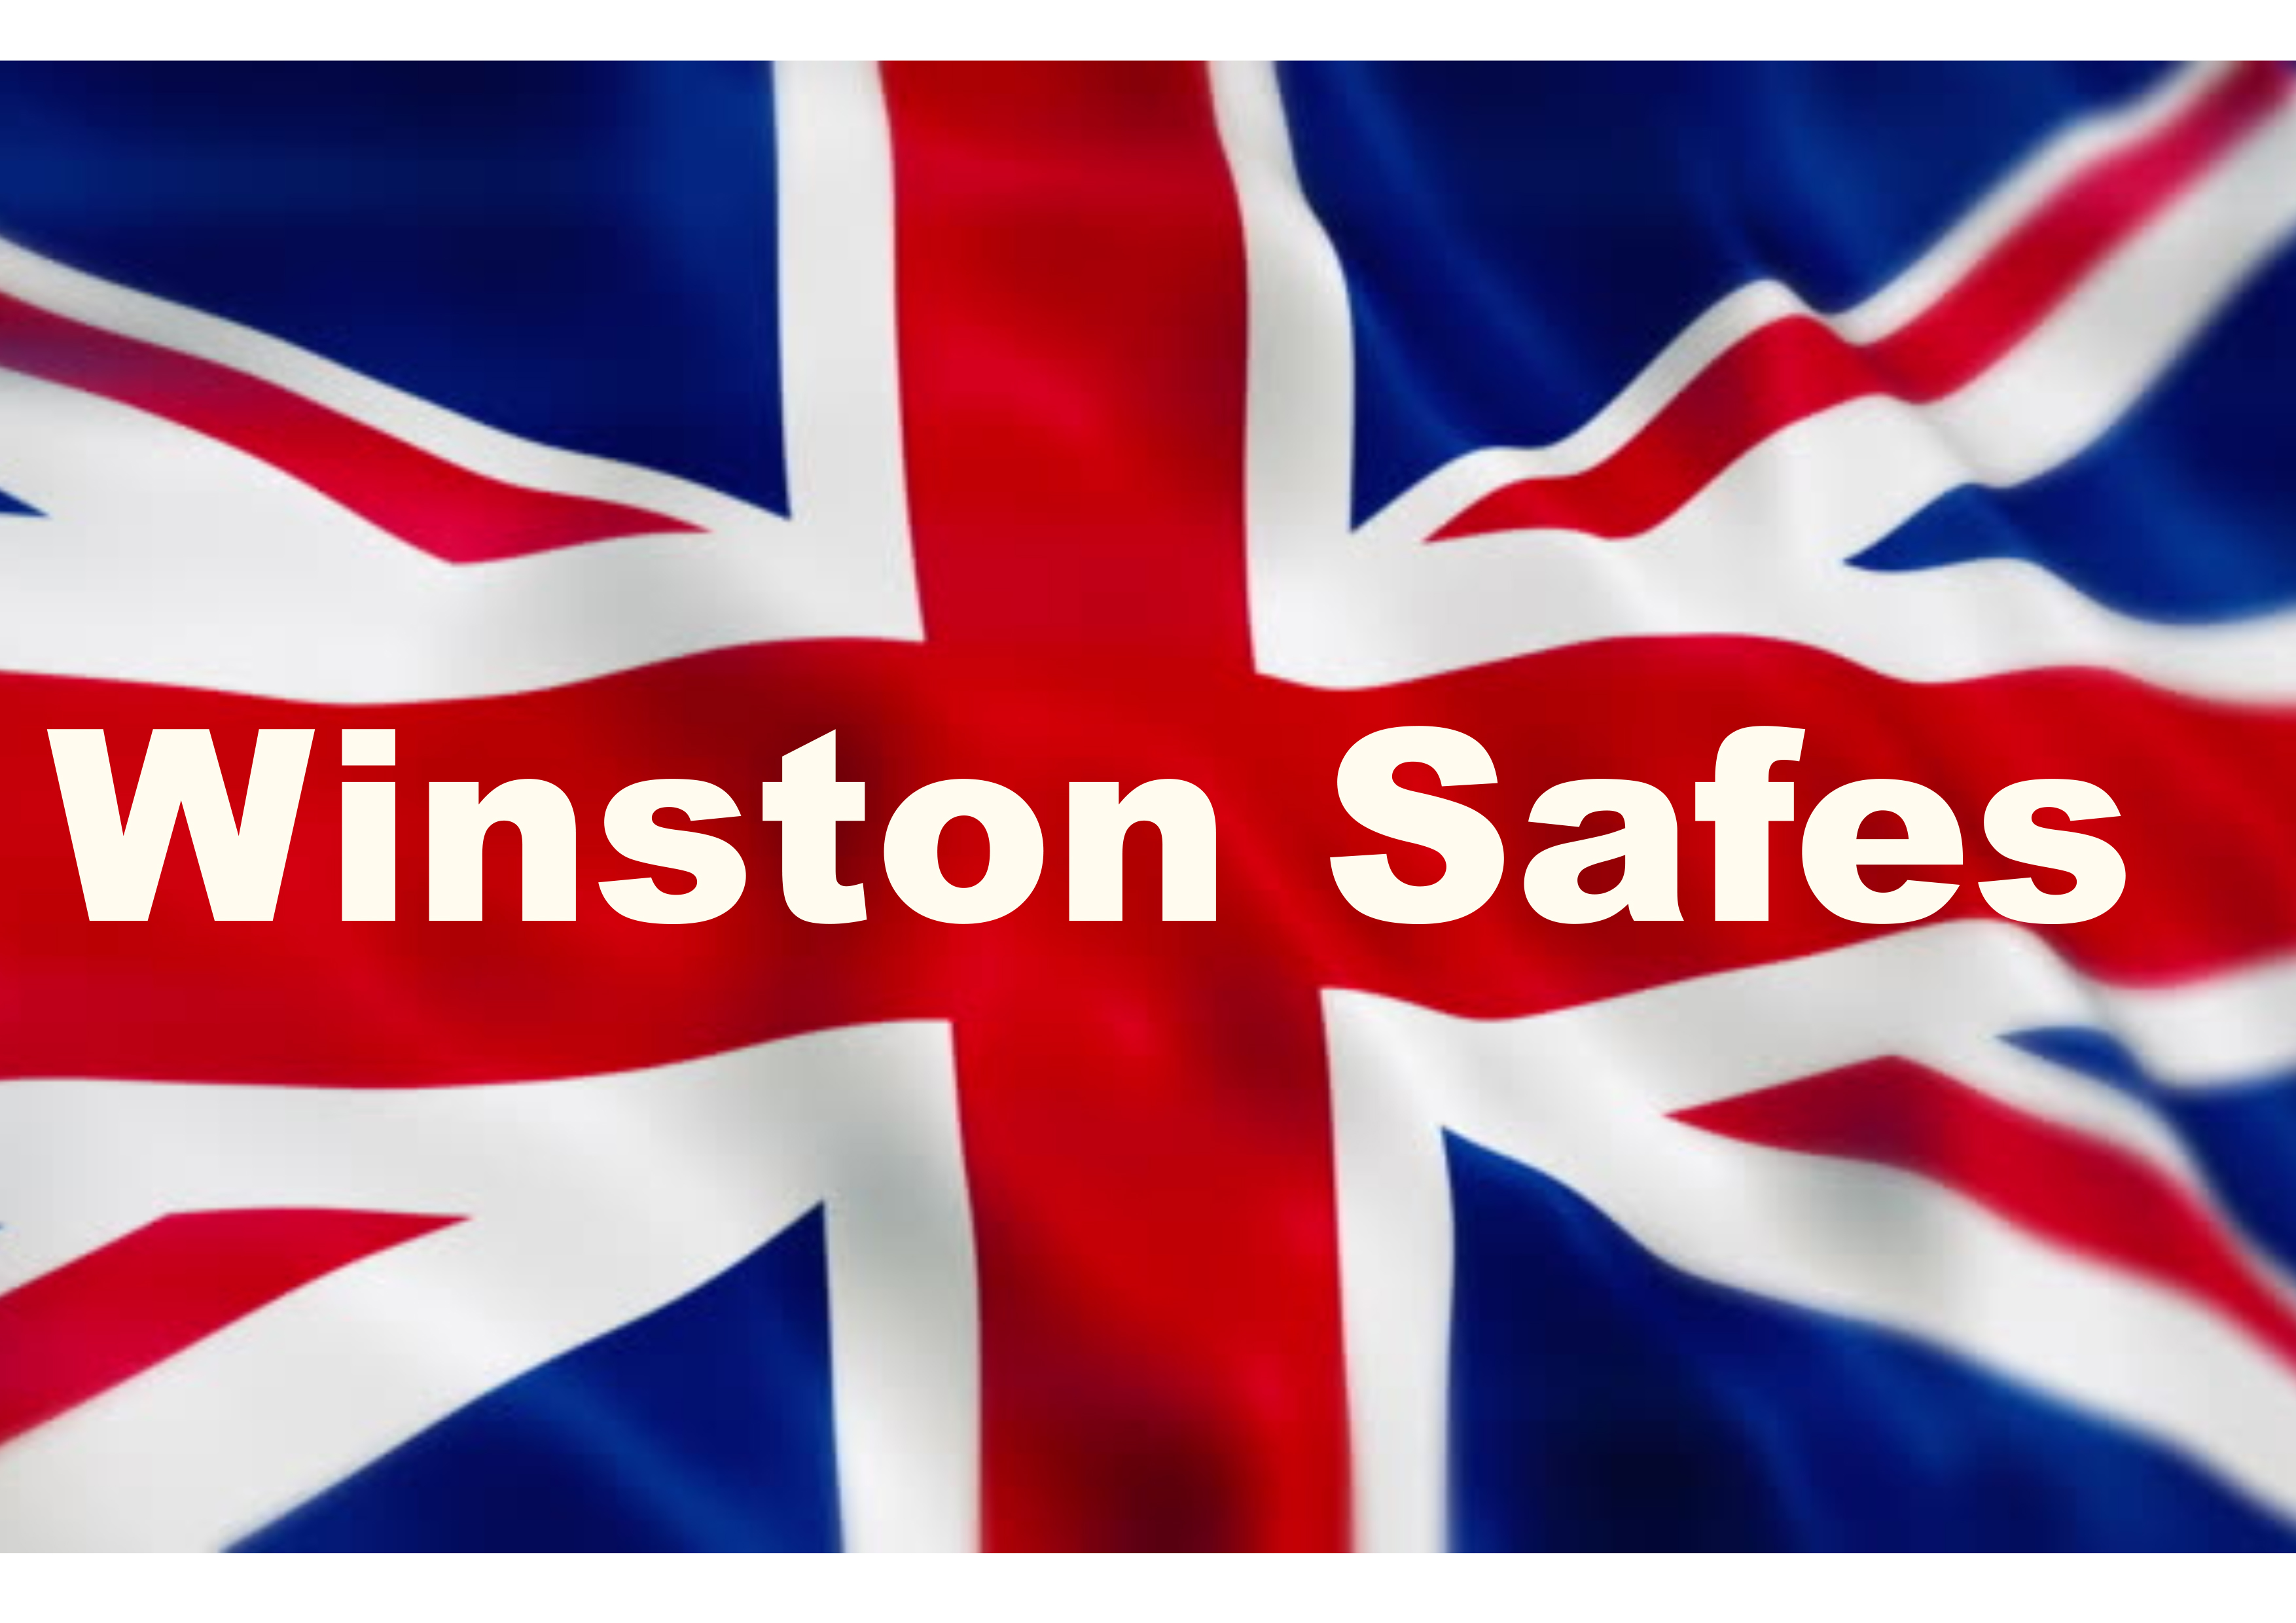 Winston Safes